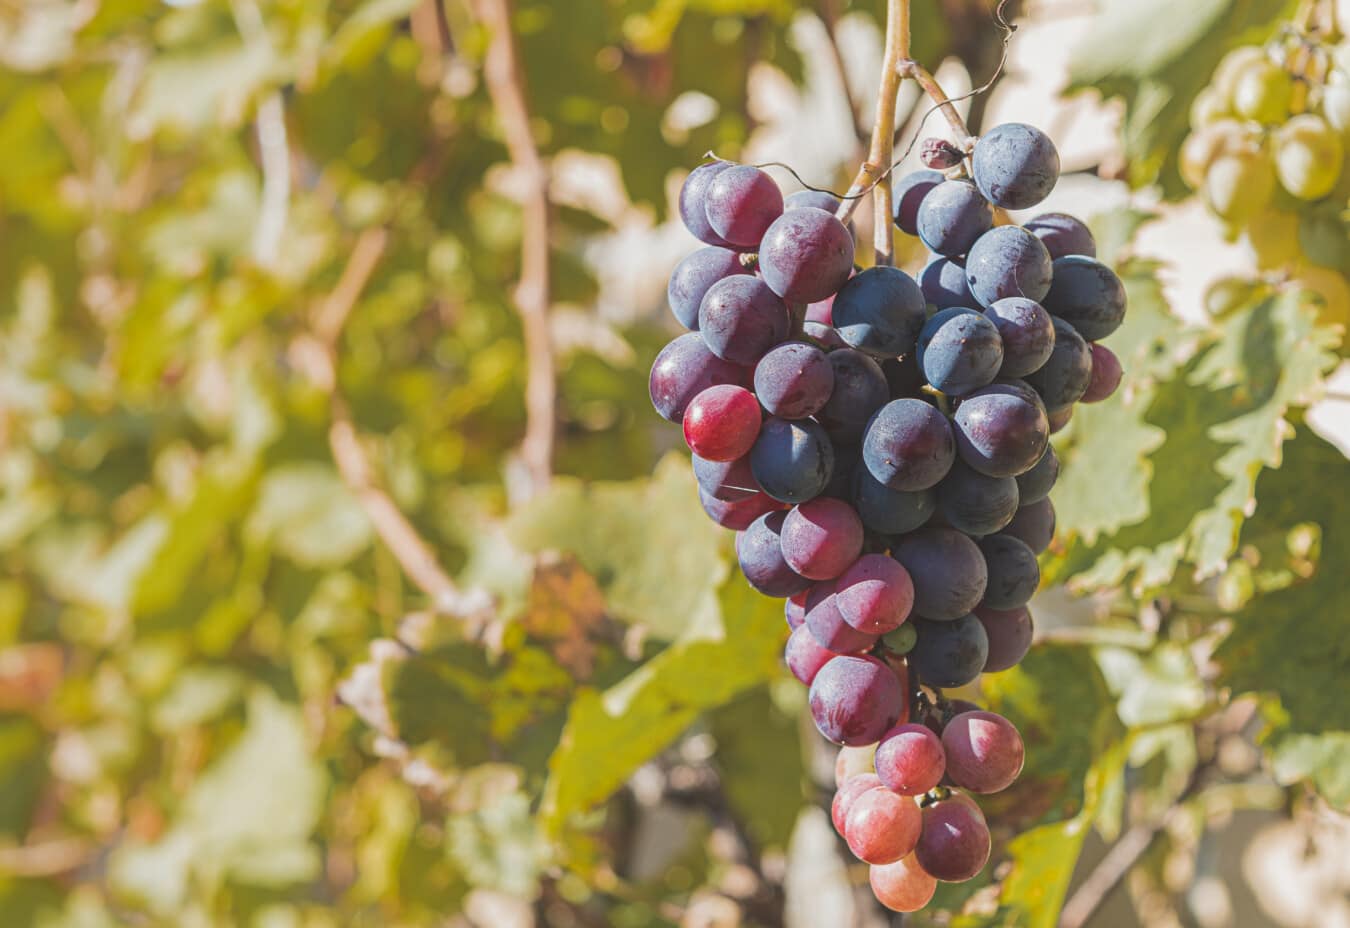 zrelo voće, grožđe, jesenja sezona, vinogradarstvo, vinograd, vinova loza, voće, purpurno, priroda, vinove loze